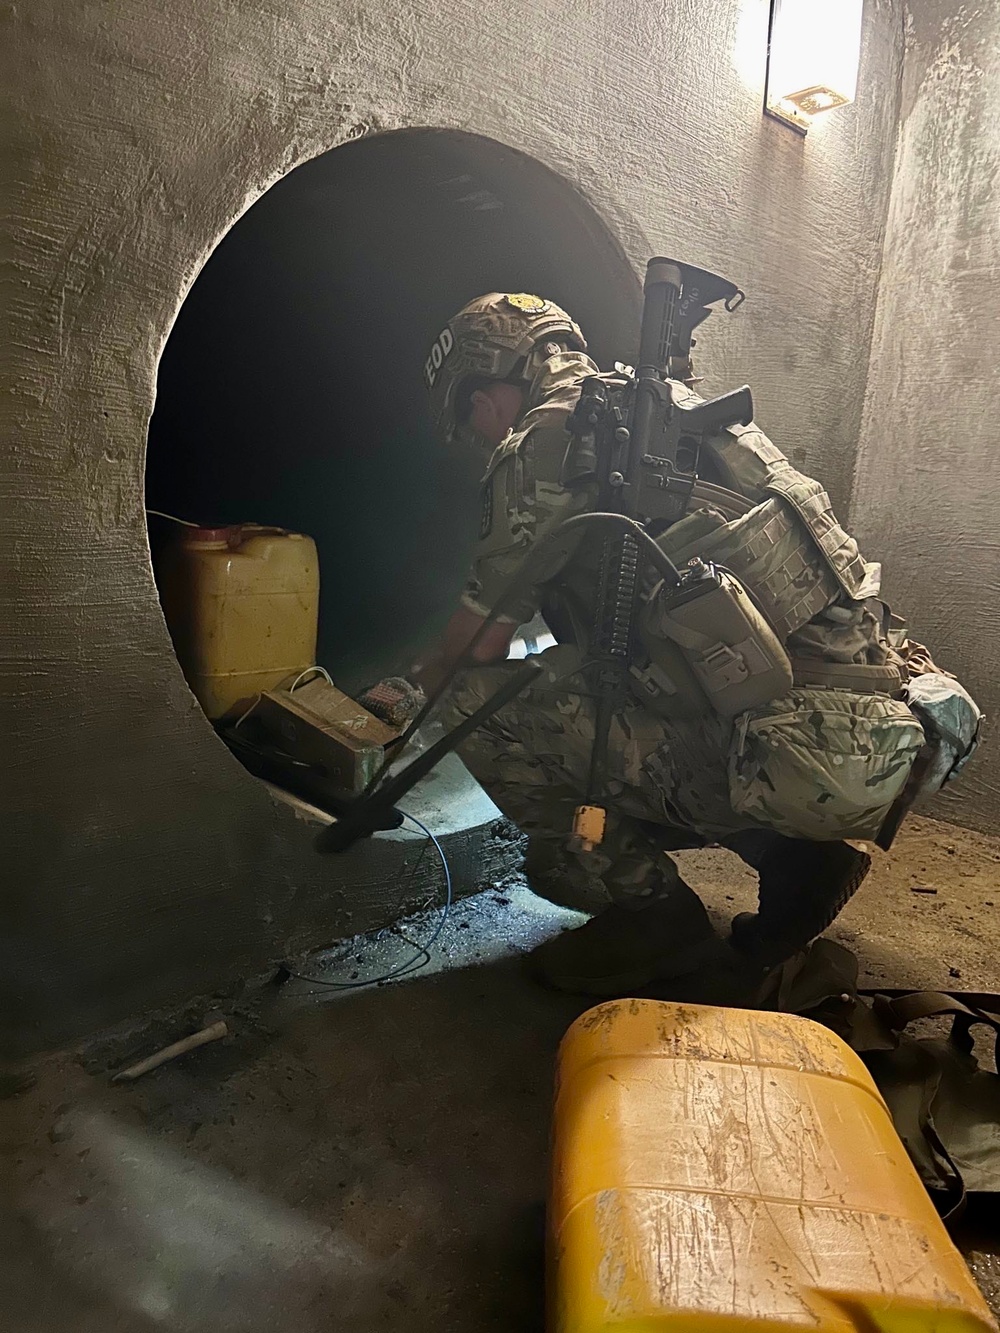 Army Explosive Ordnance Disposal Company supports new bomb suit helmet program